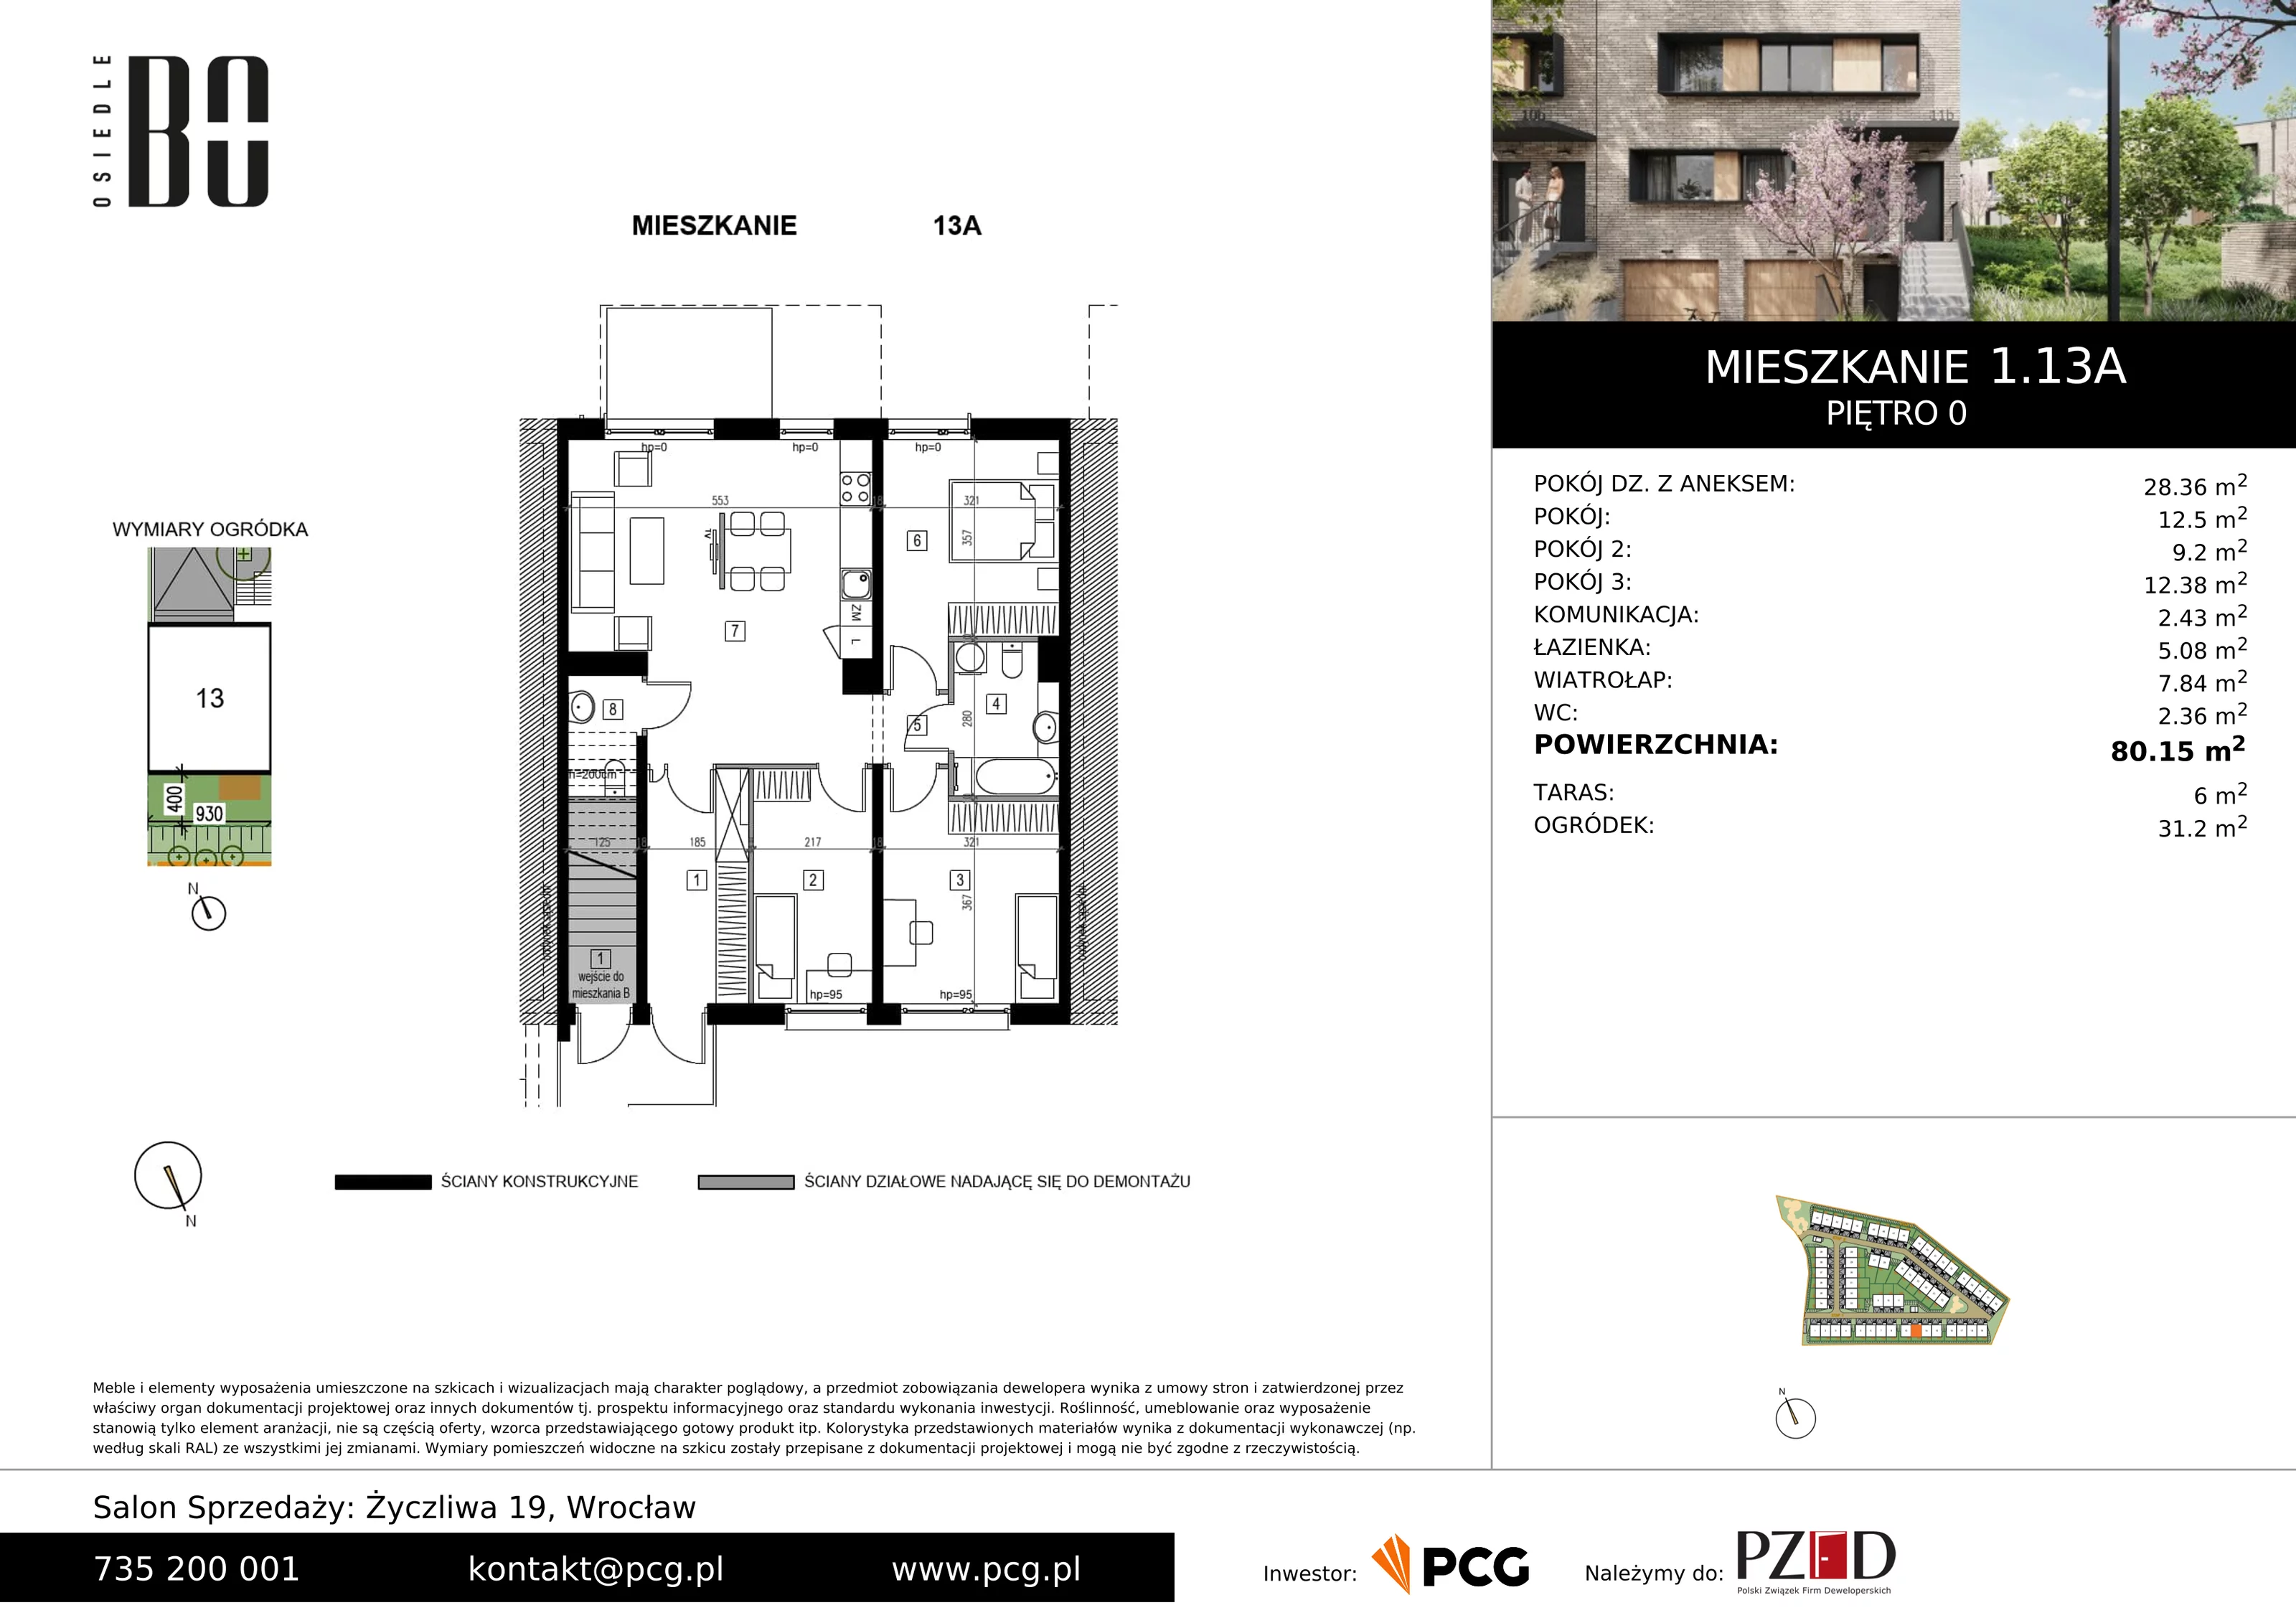 Apartament 80,15 m², parter, oferta nr 1.13A, Osiedle BO, Wrocław, Kowale, ul. Bociana